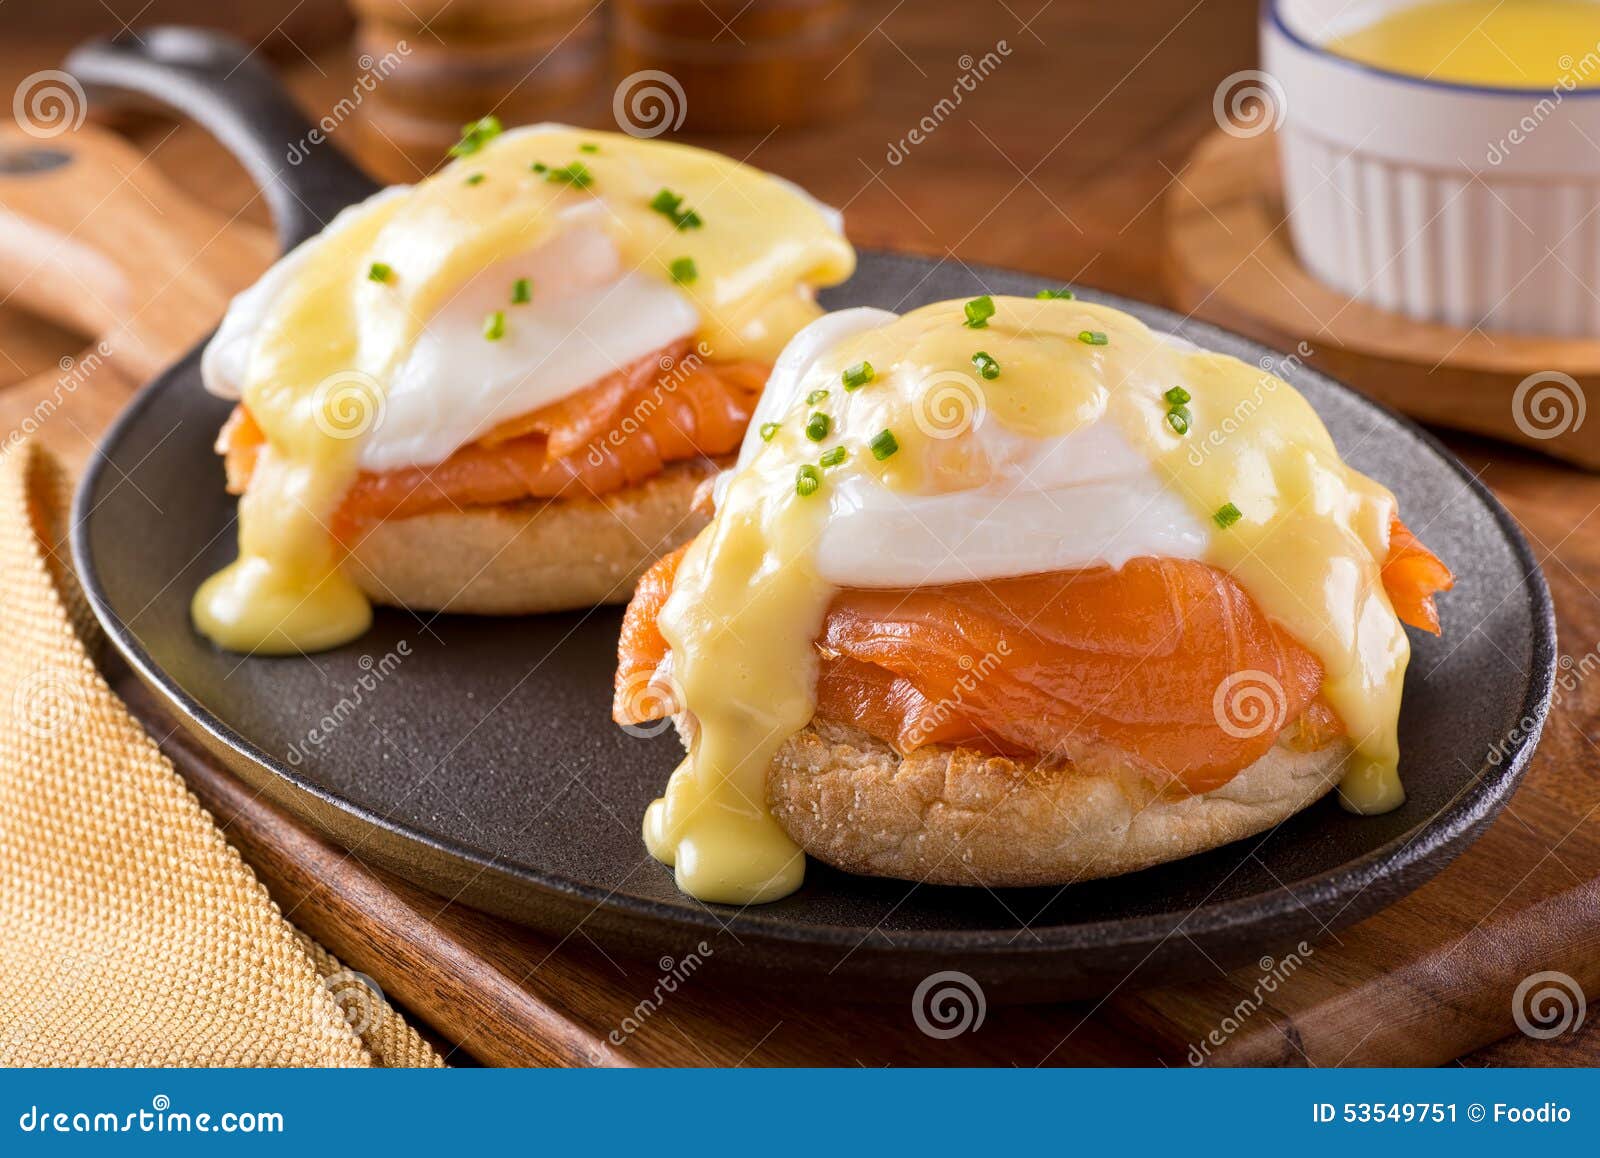 eggs benedict with smoked salmon